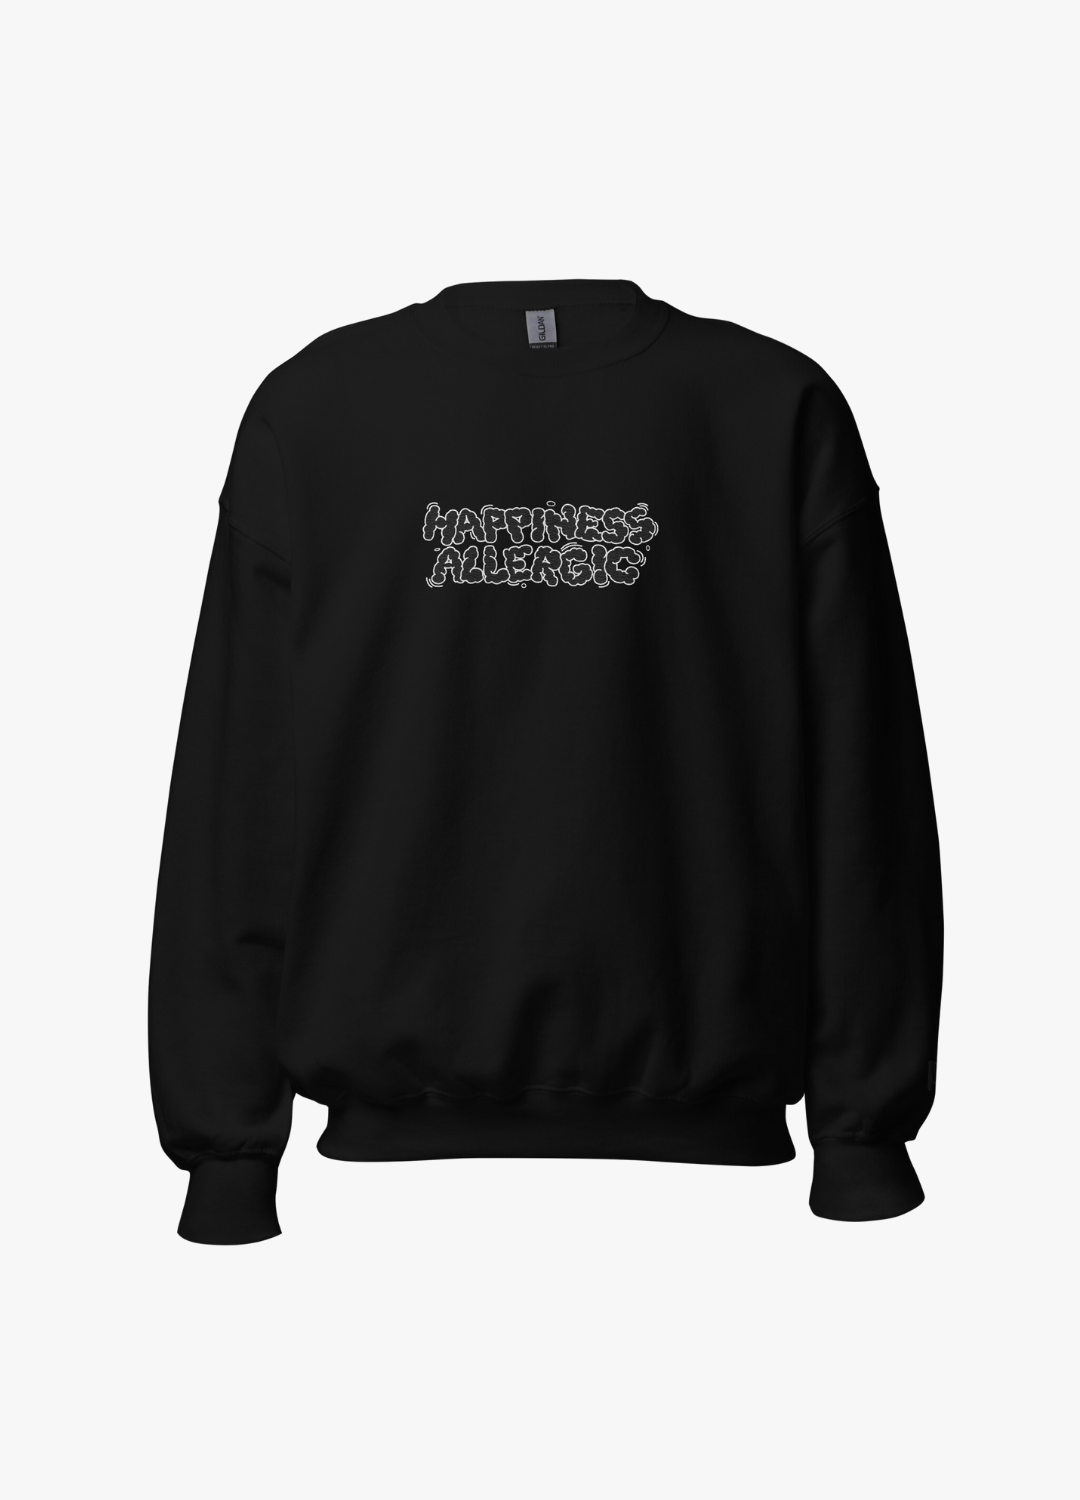 sweatshirt unisexe noir avec broderie texte noir happiness allergic style graffiti streetstyle